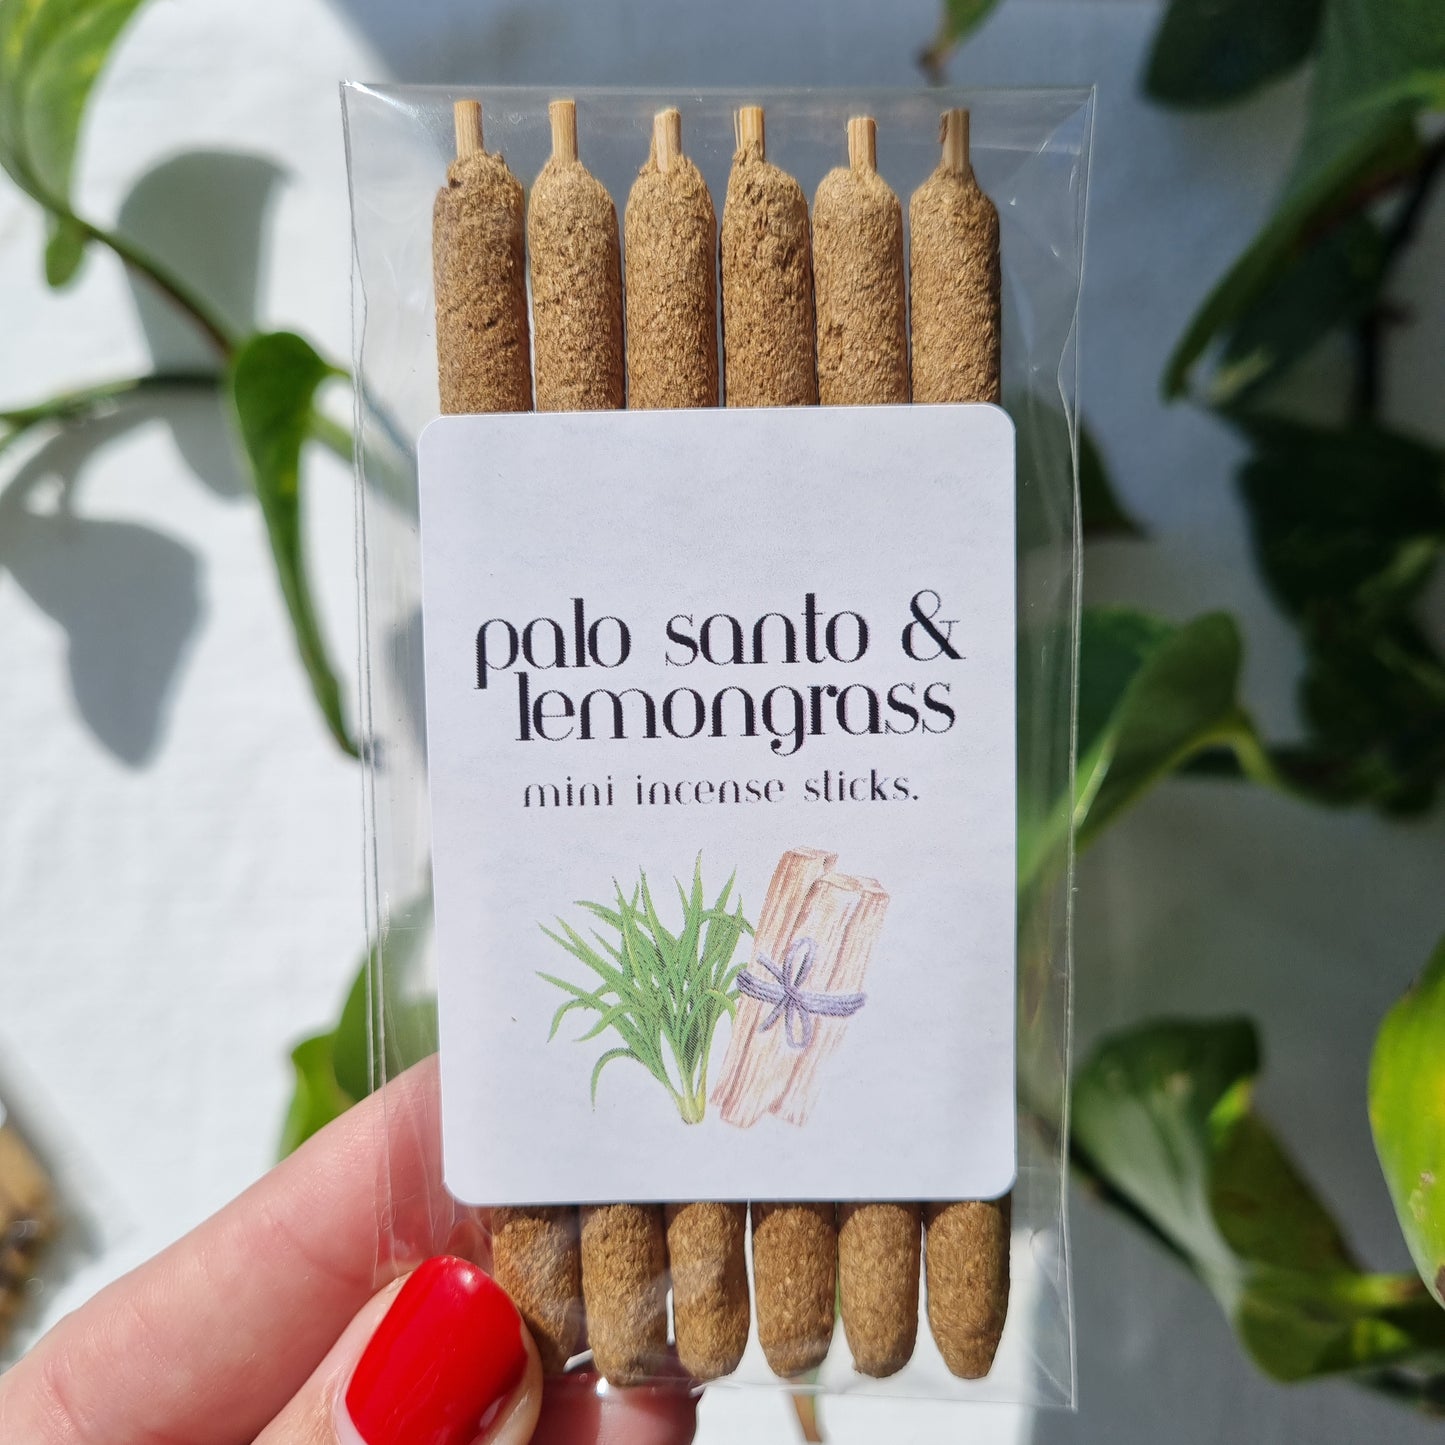 Lemograss & Palo Santo Mini Incense Sticks - 6 Pack - Sparrow and Fox